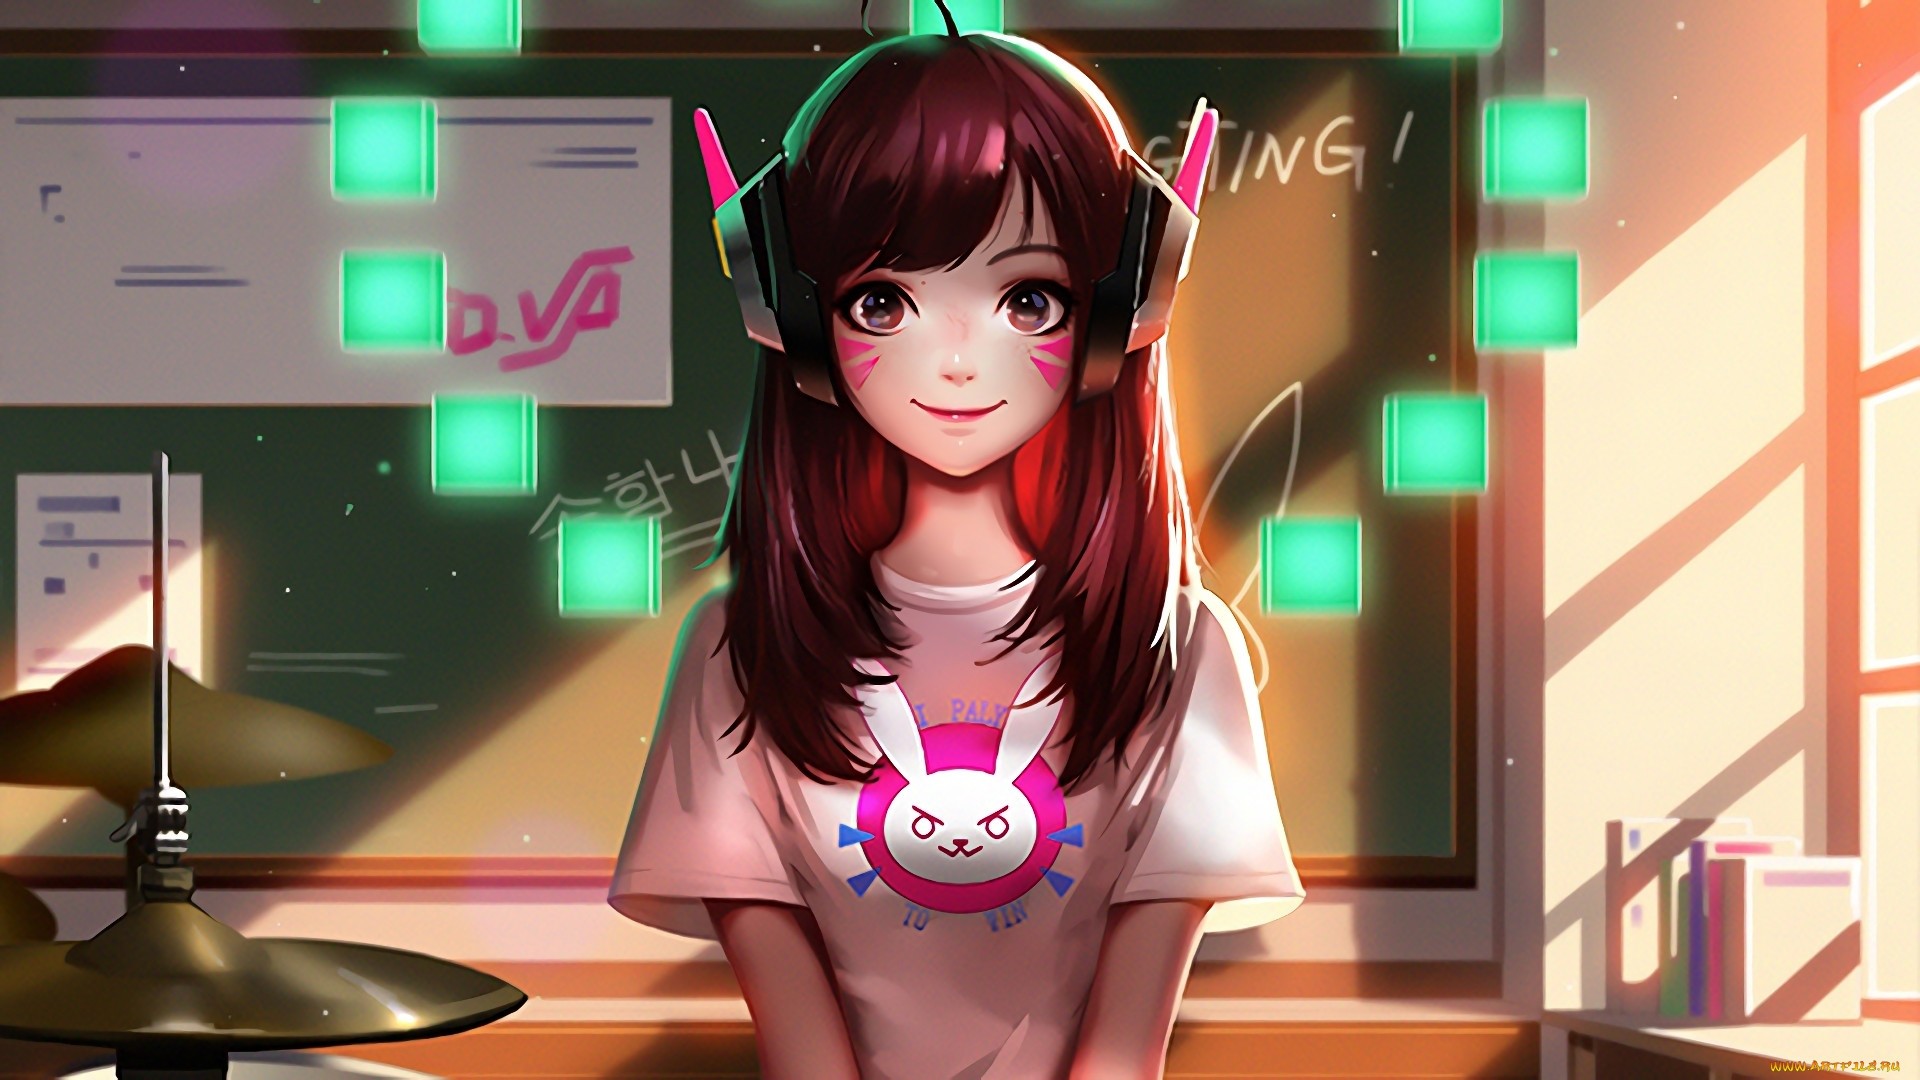 Gamer Girl wallpaper download